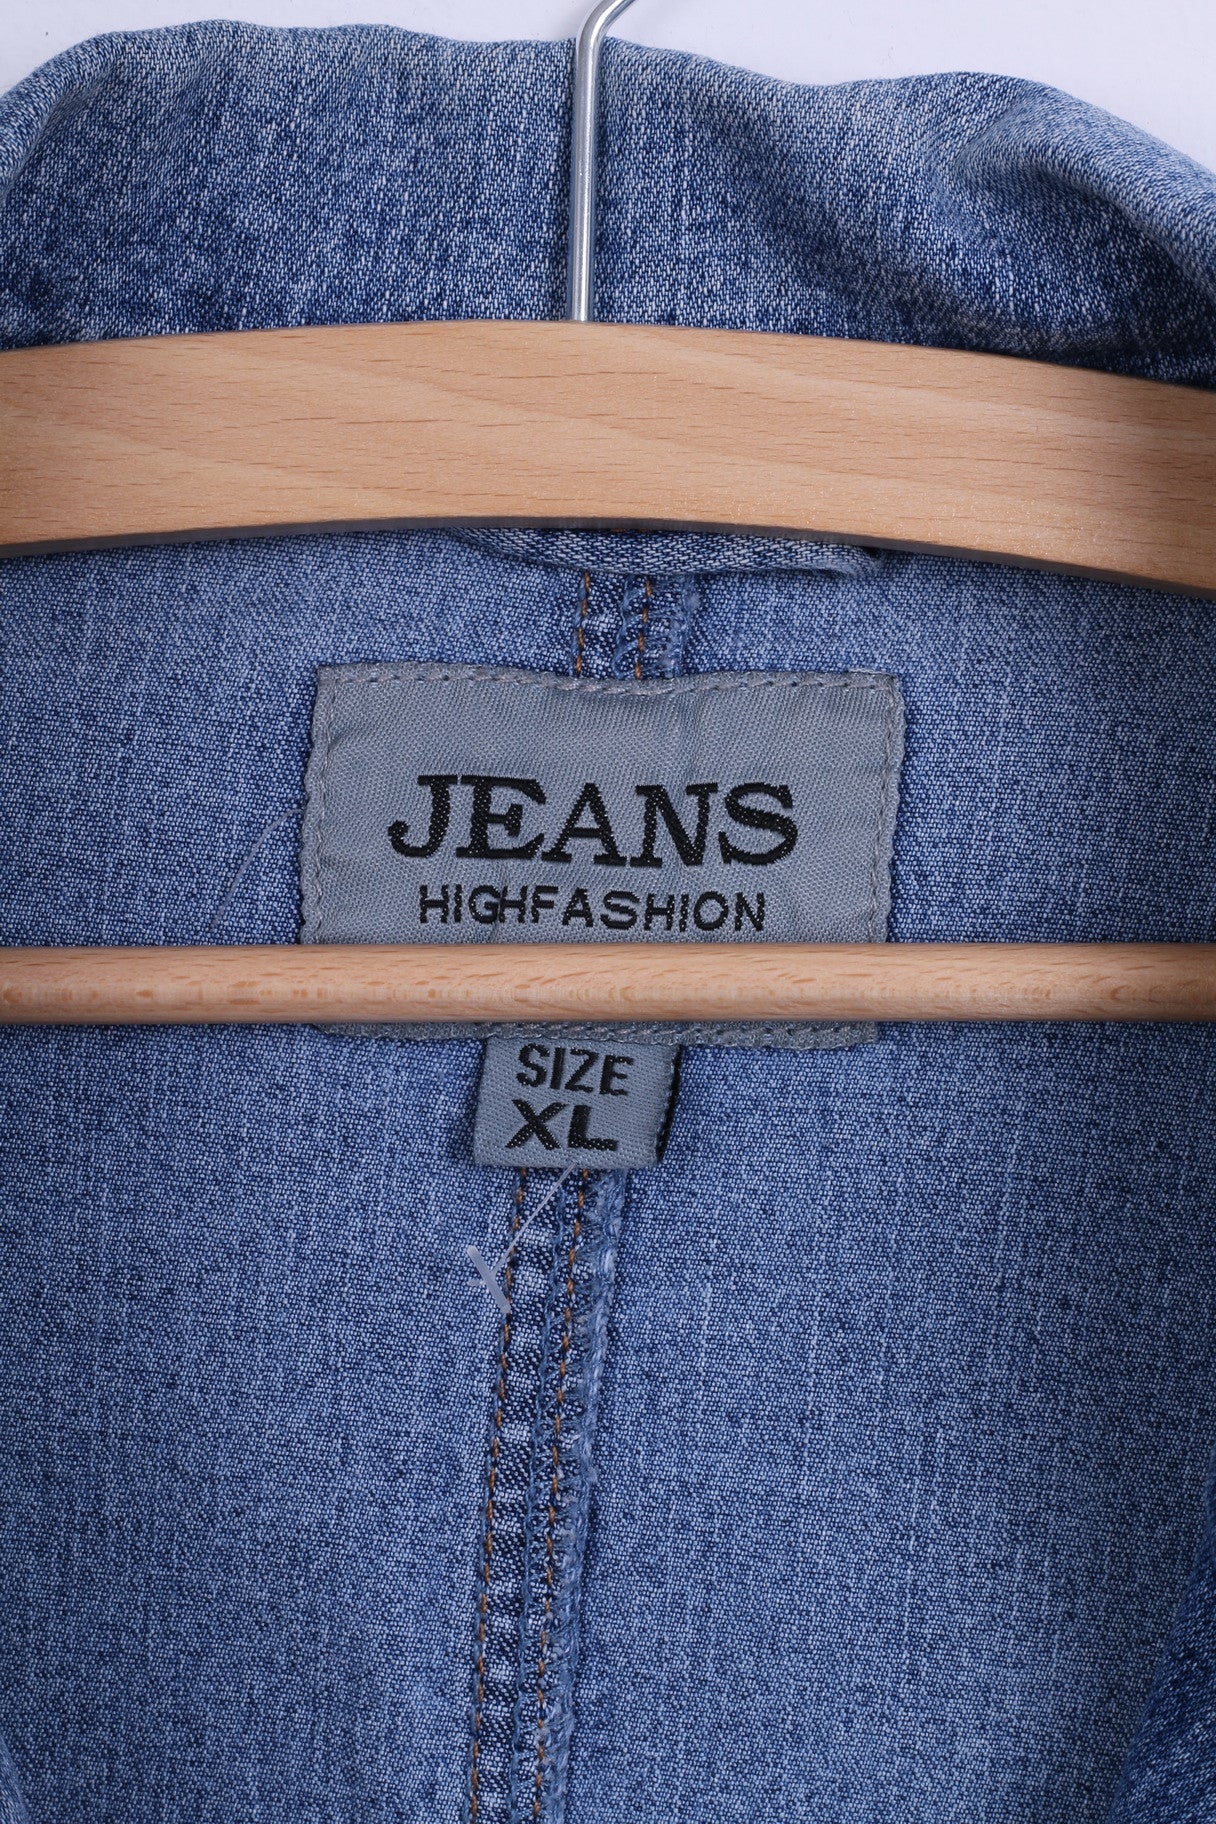 Jeans High Fashion Womens XL Jacket Blue Denim Single Breasted Strech Blazer